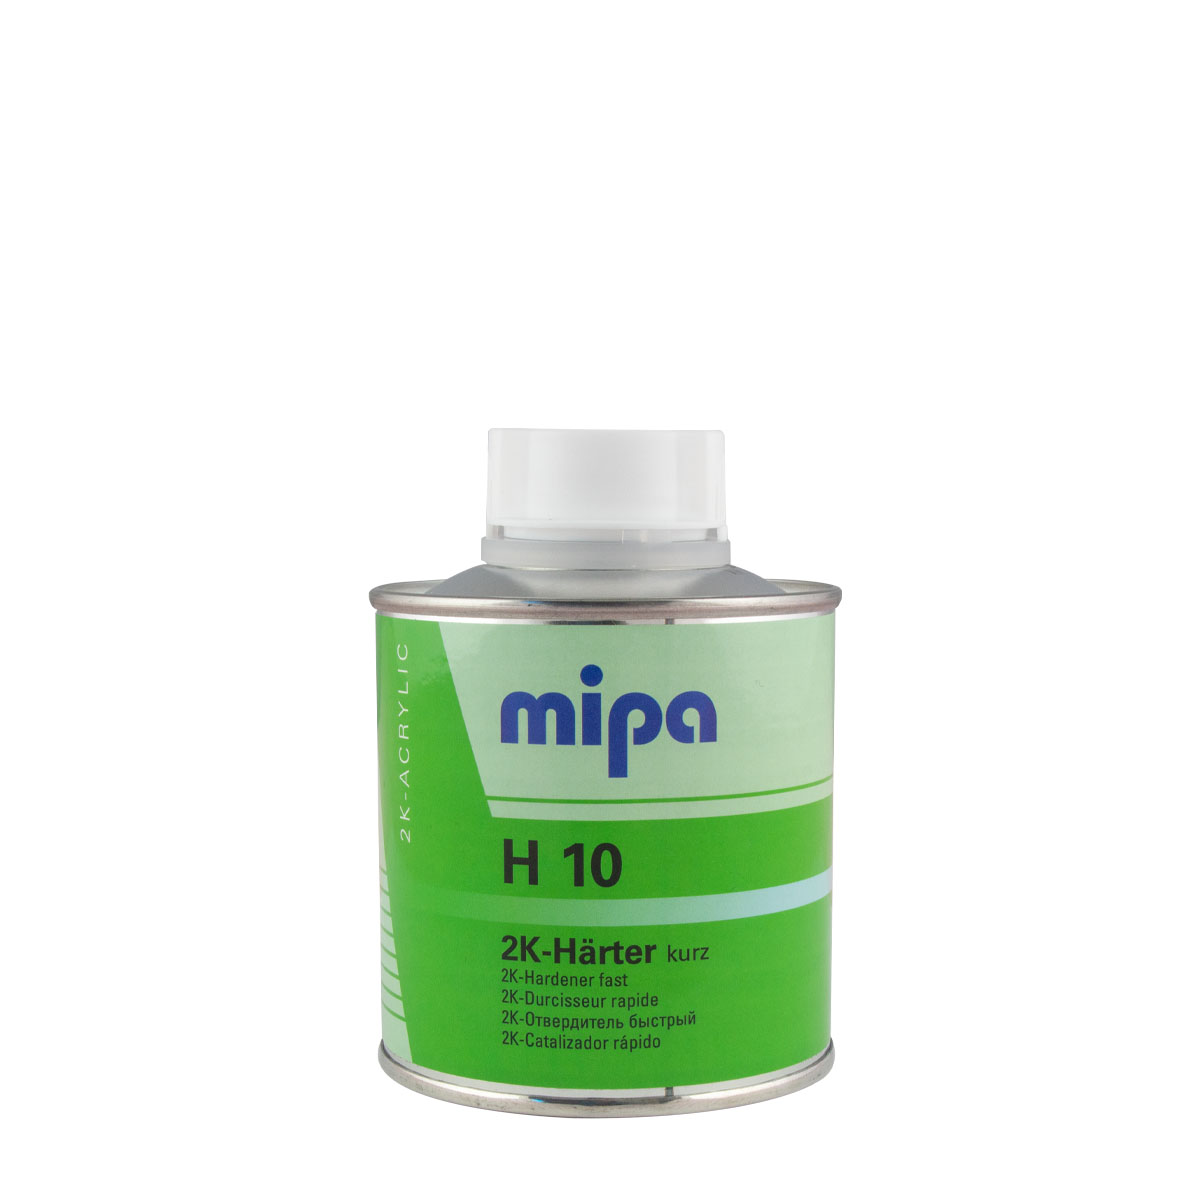 Mipa H10 2K-Härter kurz, 250ml